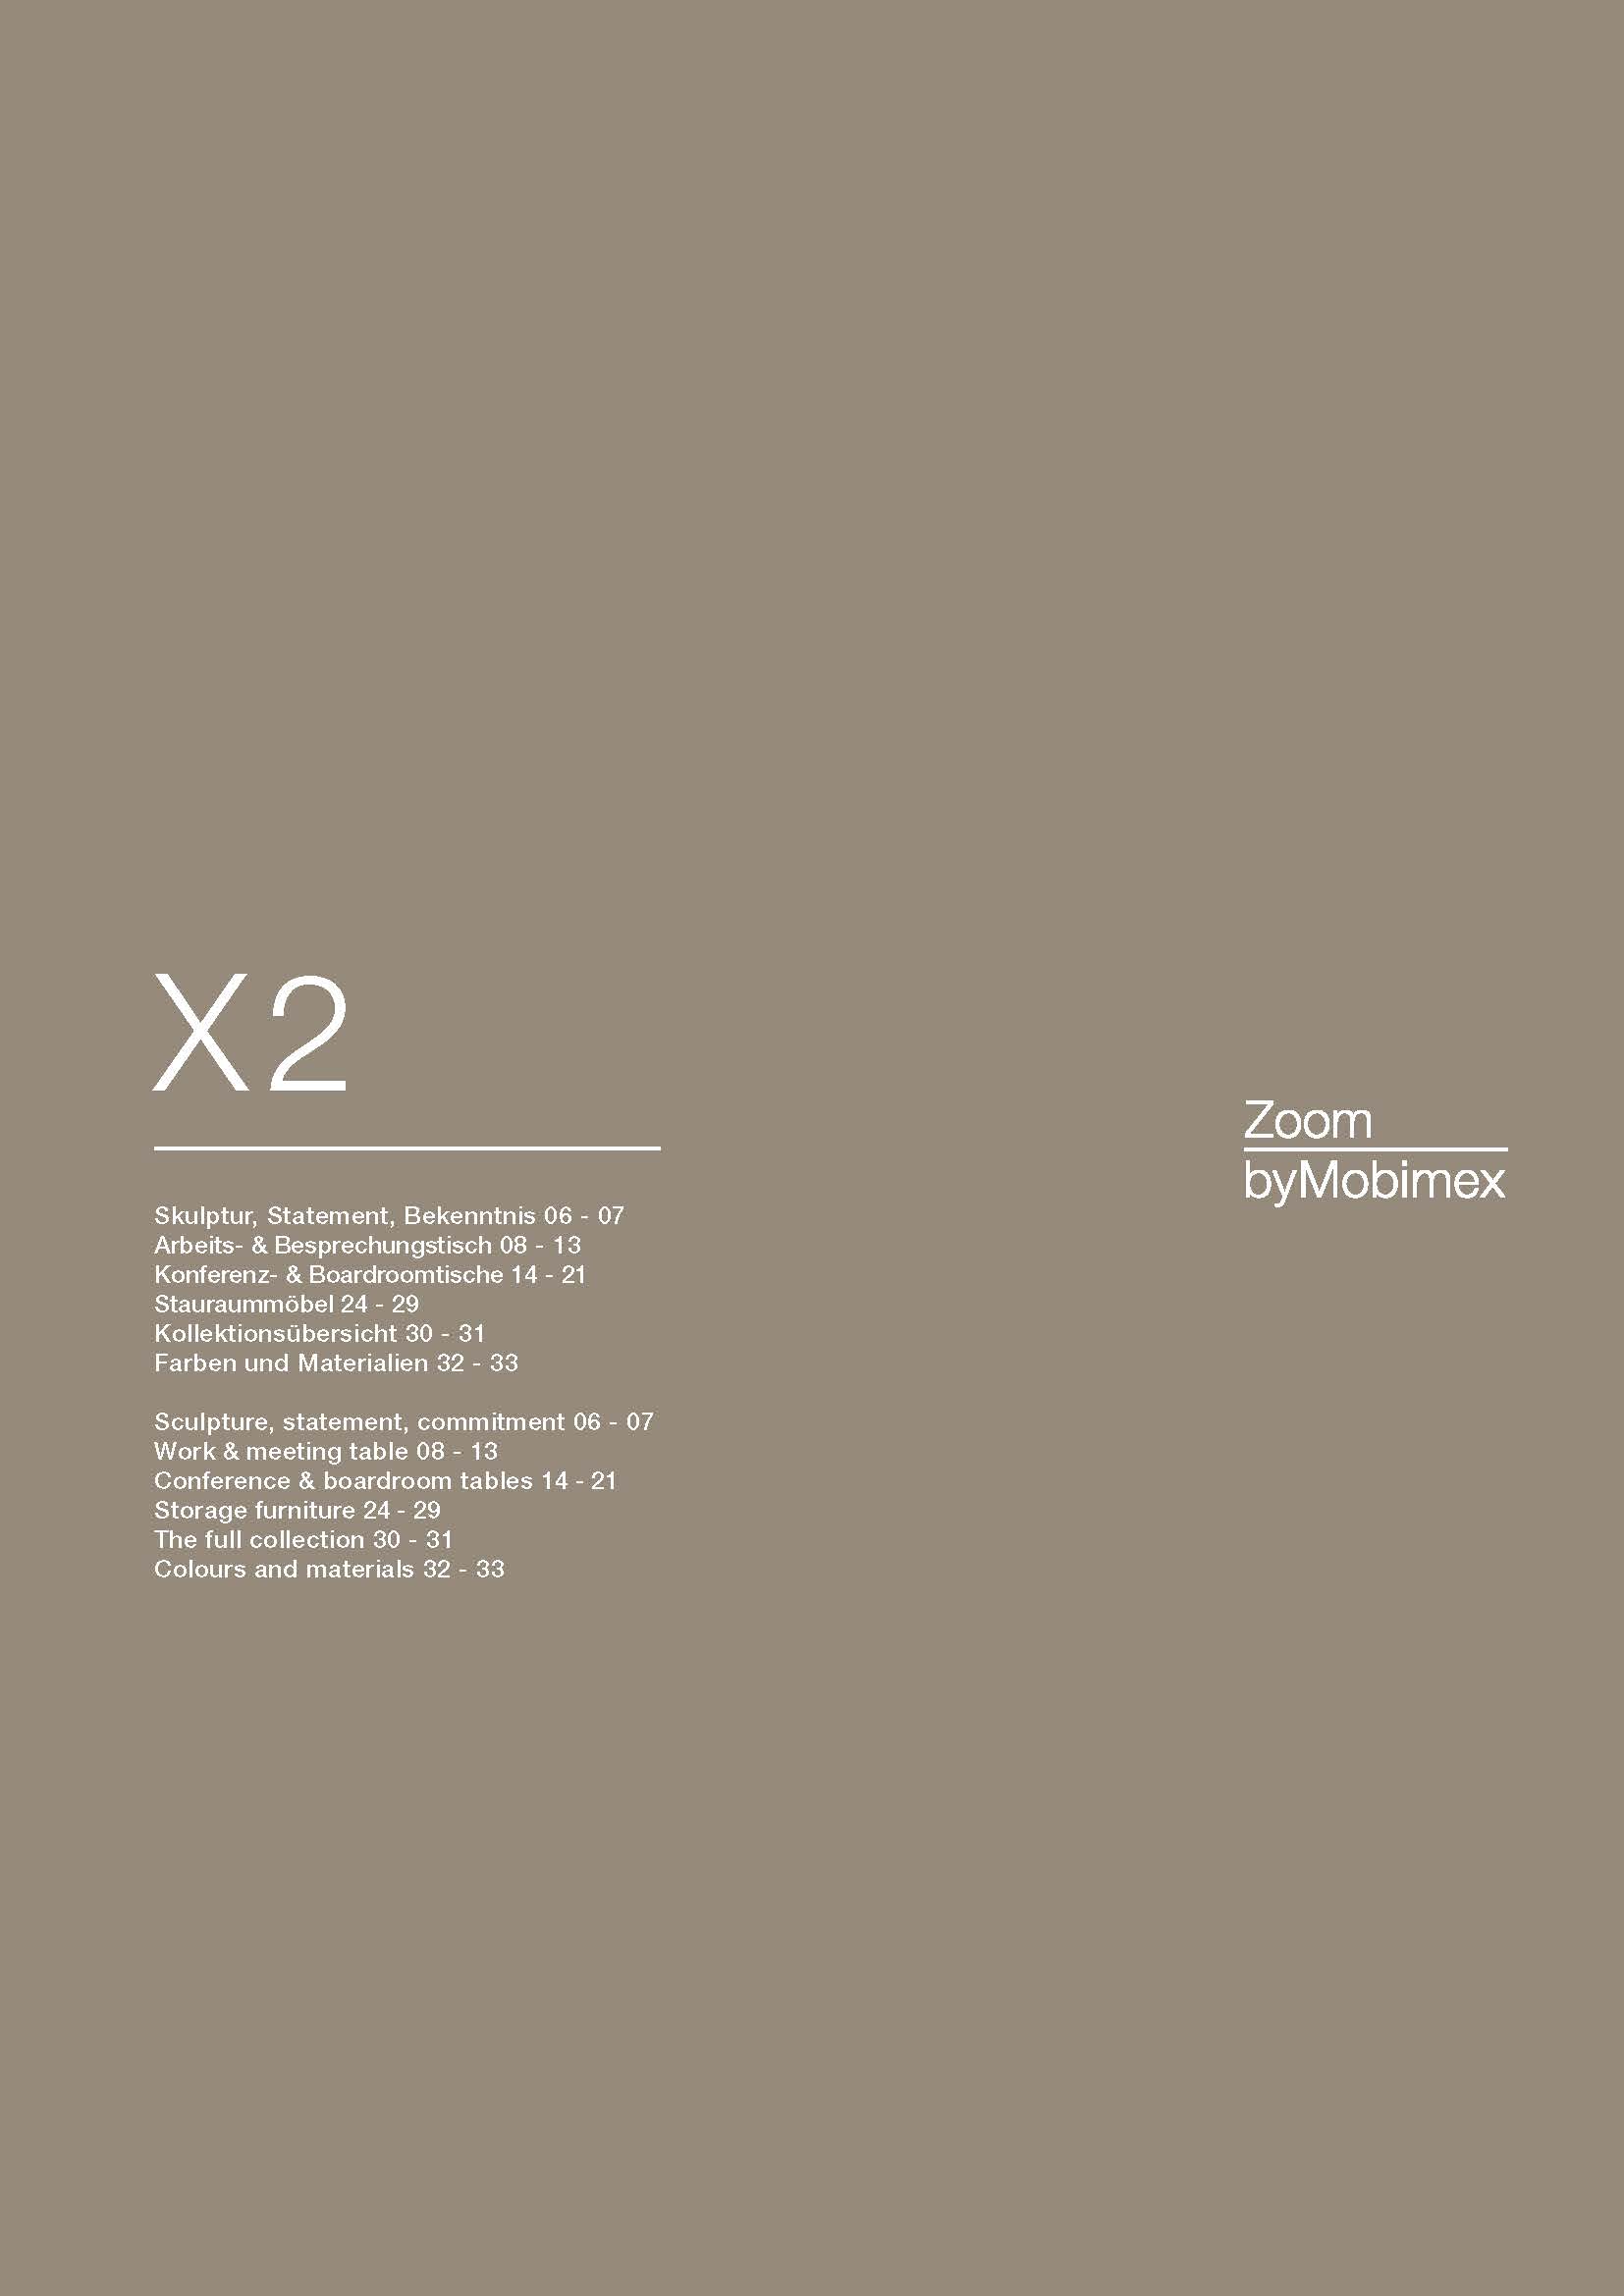 X2 Office Broschüre